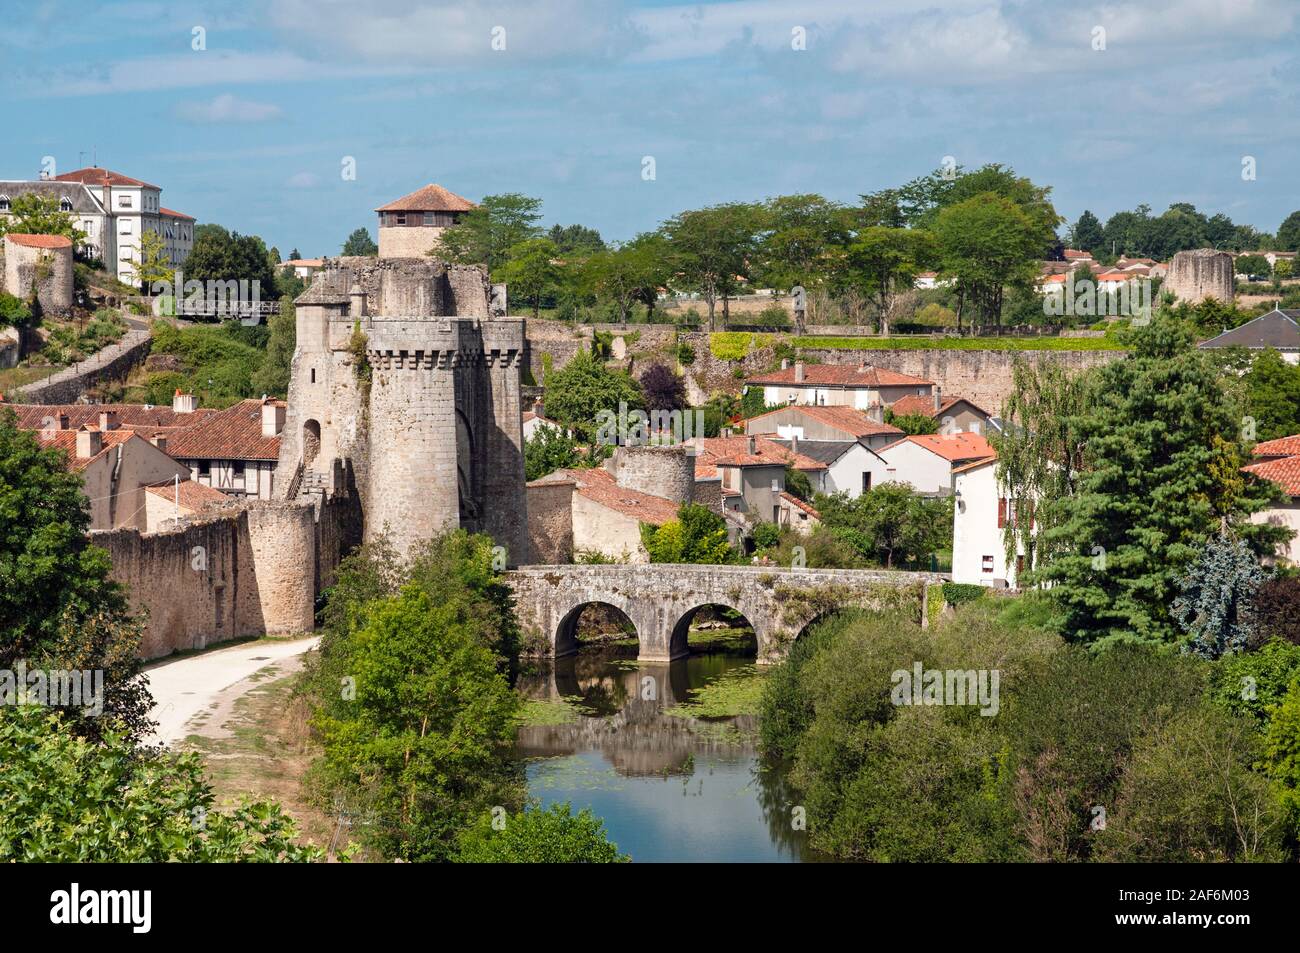 Ponte sul fiume Thouet e la porta fortificata di Saint-Jacques (Porte Saint-Jacques) nella città medievale di Parthenay, Deux-Sevres (79), Francia Foto Stock